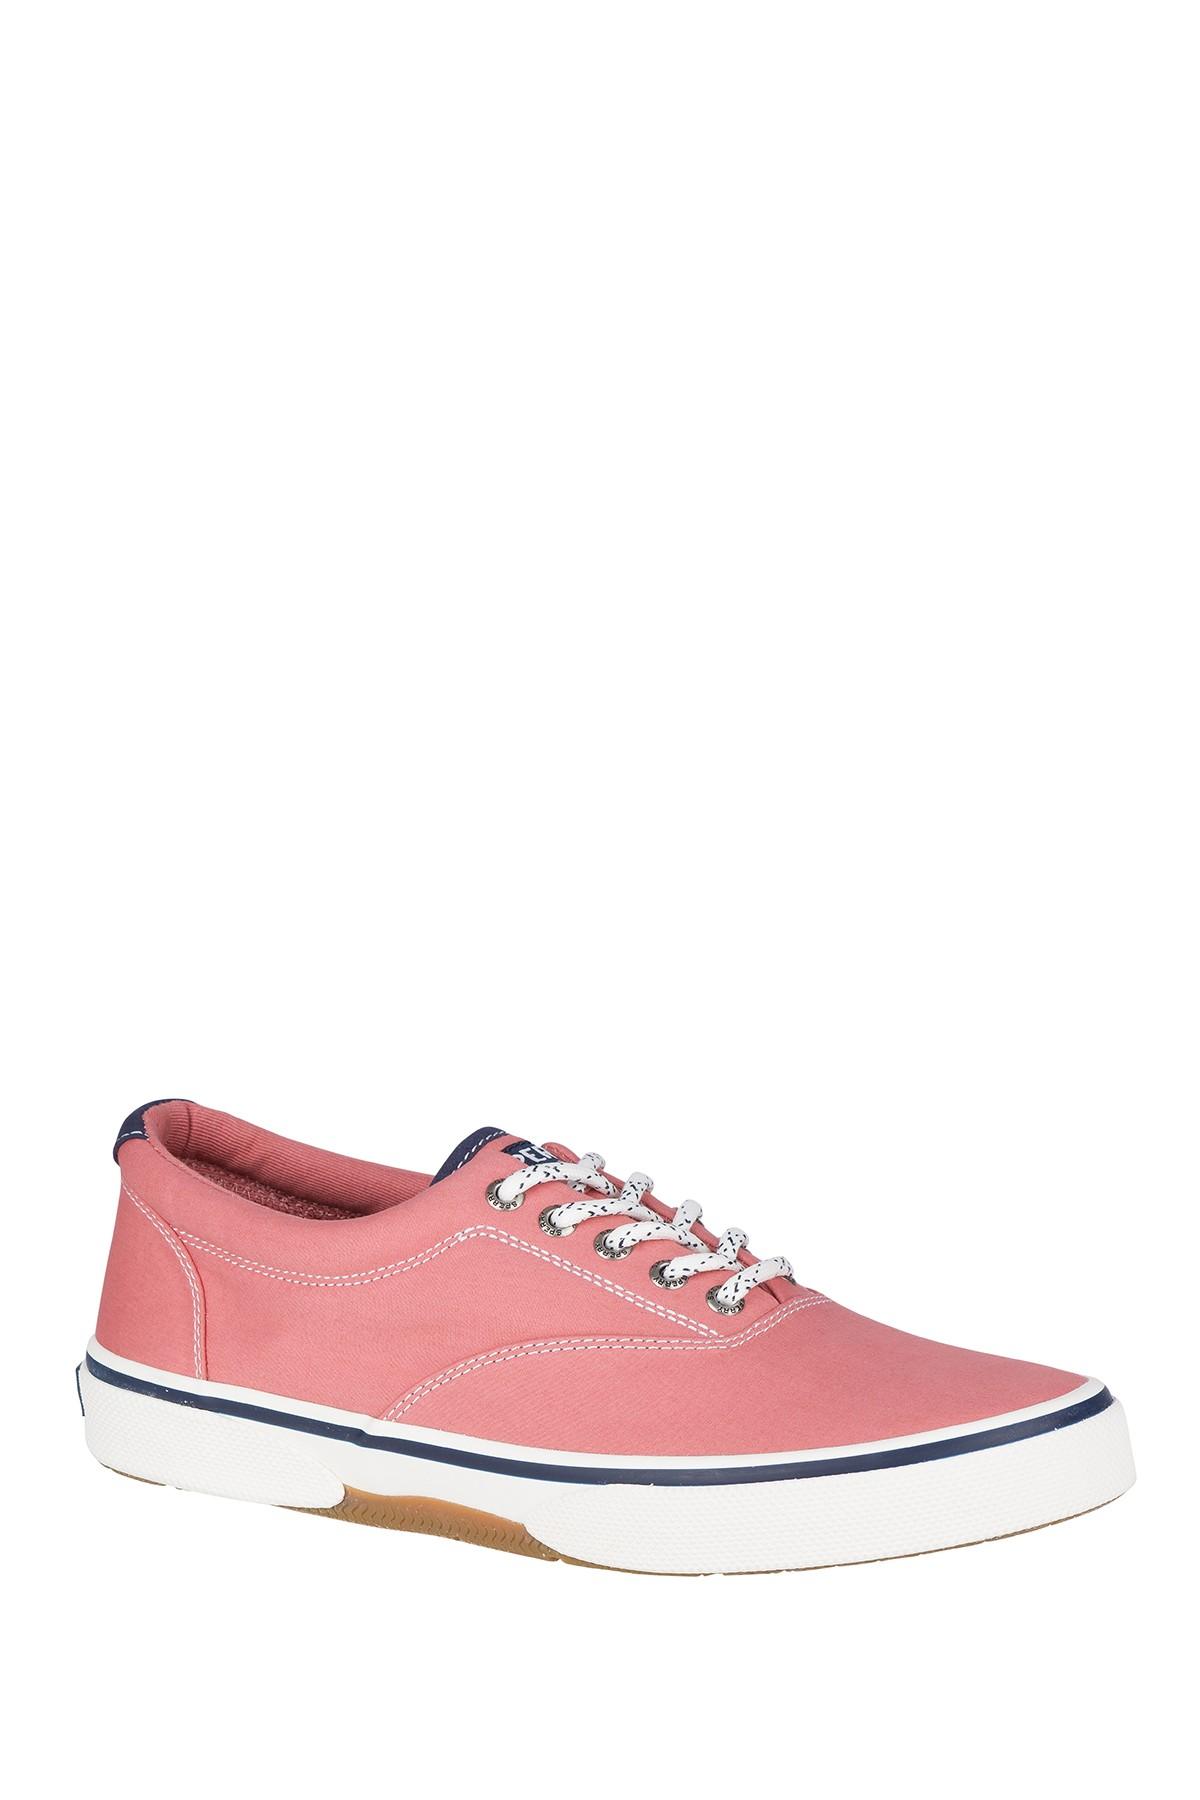 Lyst - Sperry Top-Sider Halyard Cvo Sneaker in Pink for Men